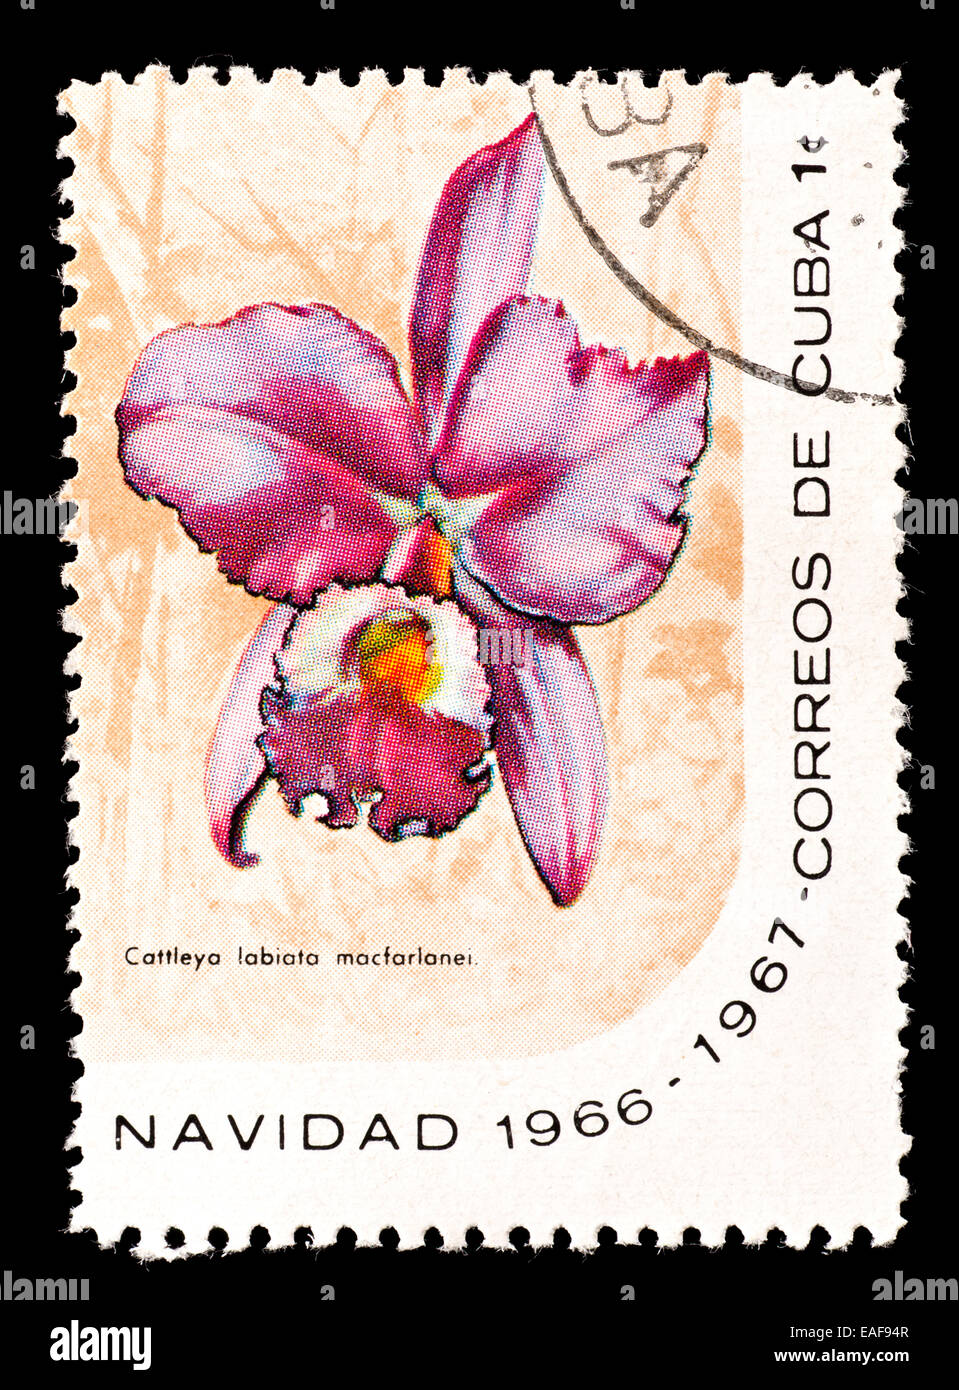 Postage stamp from Cuba depicting a Crimson Cattleya or Ruby-lipped Cattleya orchid (Cattleya labaiata) Stock Photo